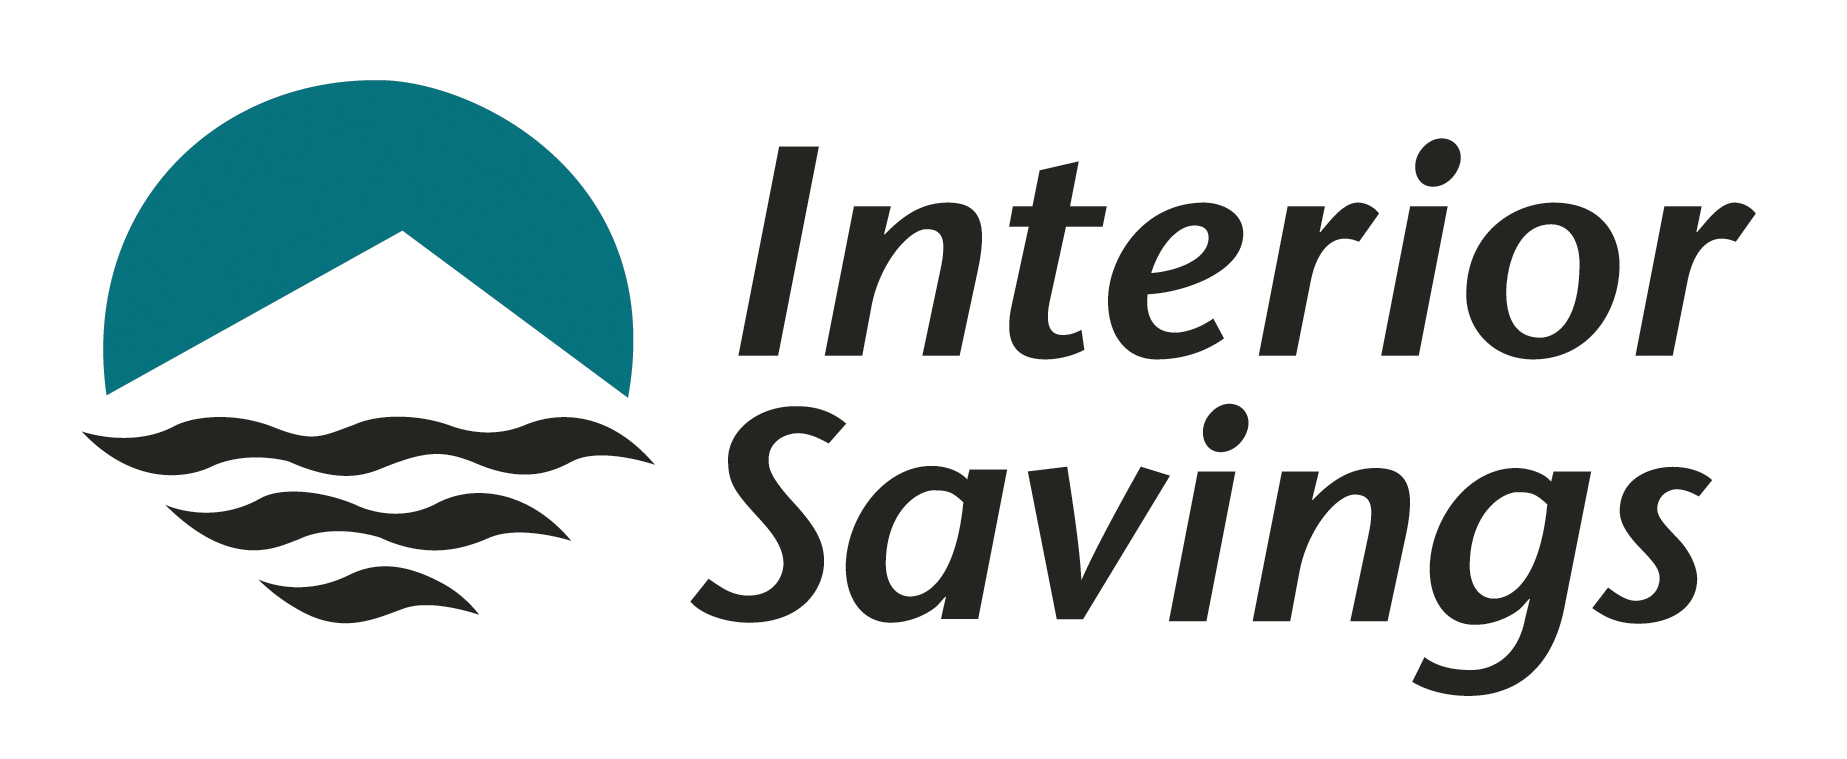 Interior Savings Credit Union